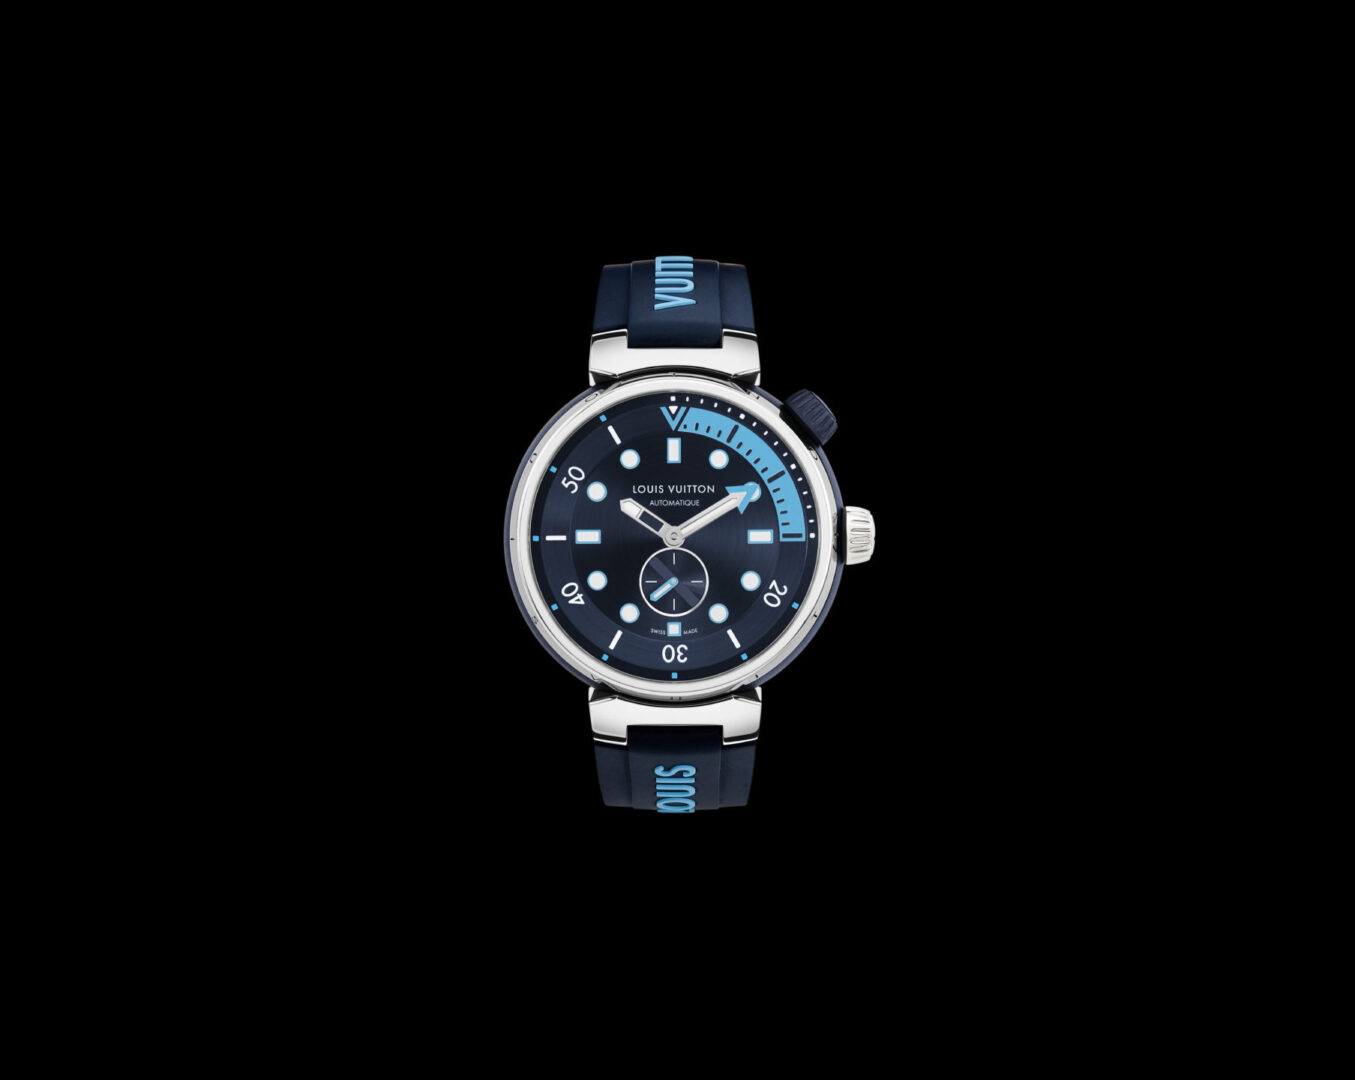 Louis Vuitton Tambour Street Diver Skyline Blue winning watch of the Divers Watch Prize 2021 1807x1440 1